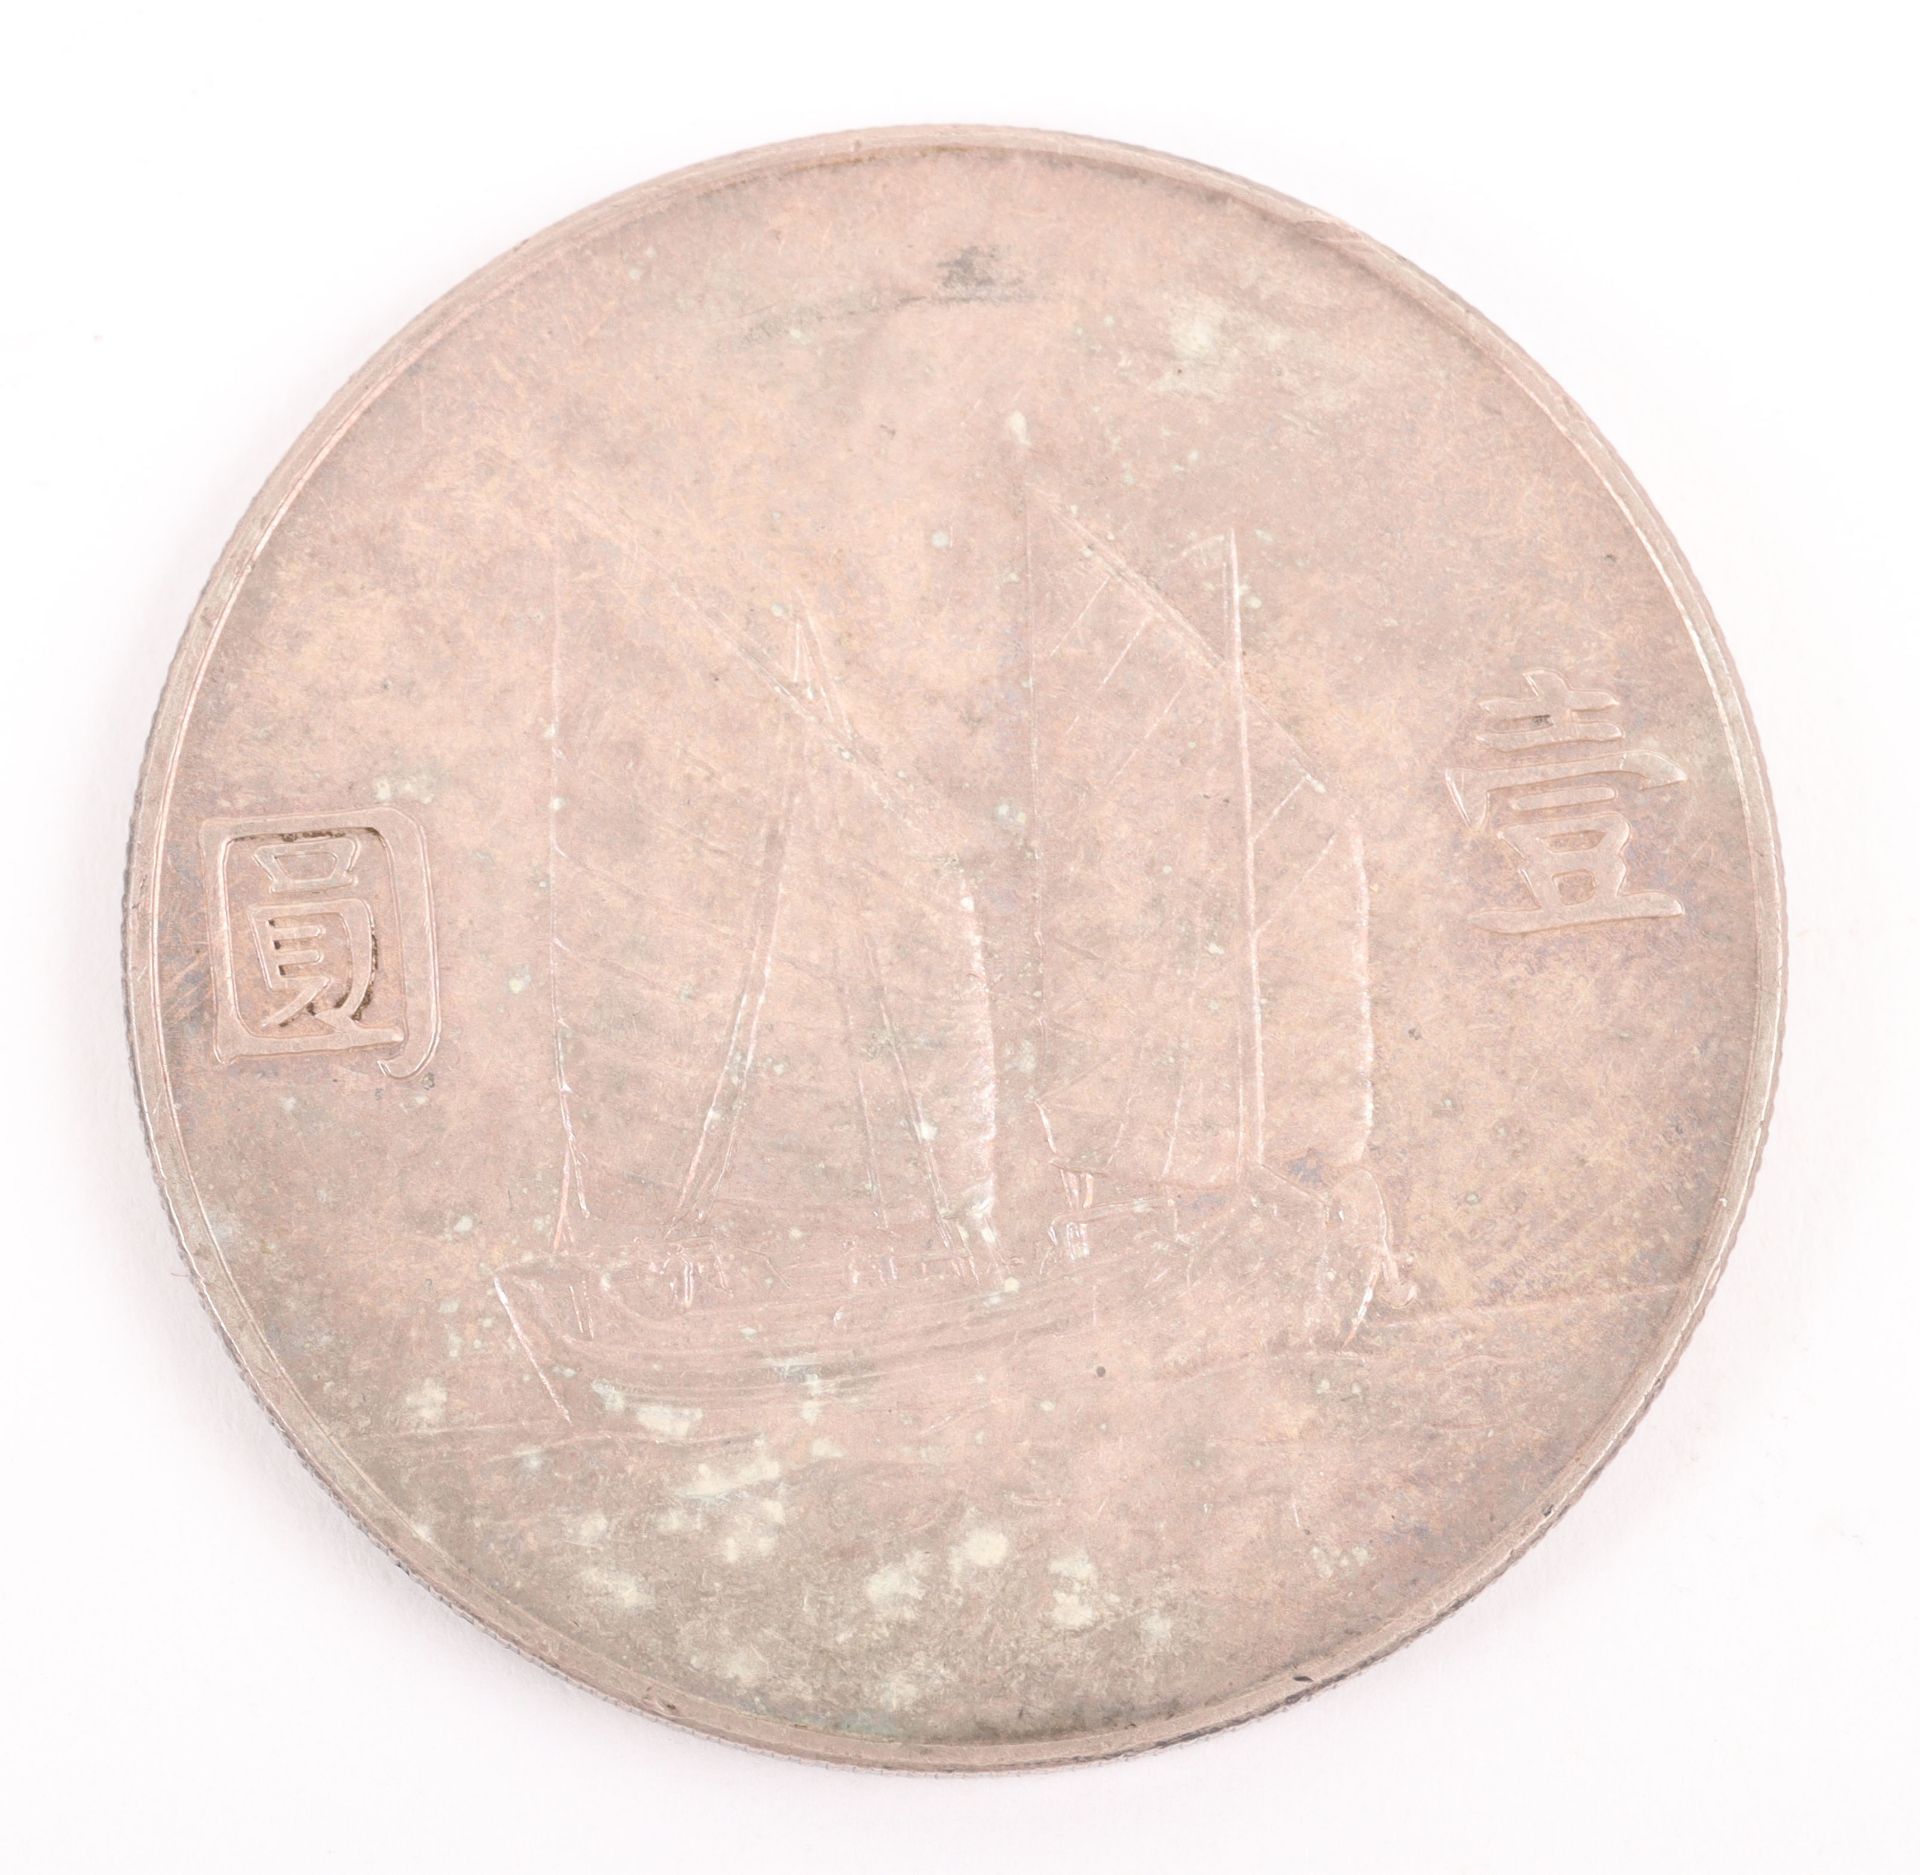 Republic of China, 1934 Yuan (Dollar) - Image 2 of 2